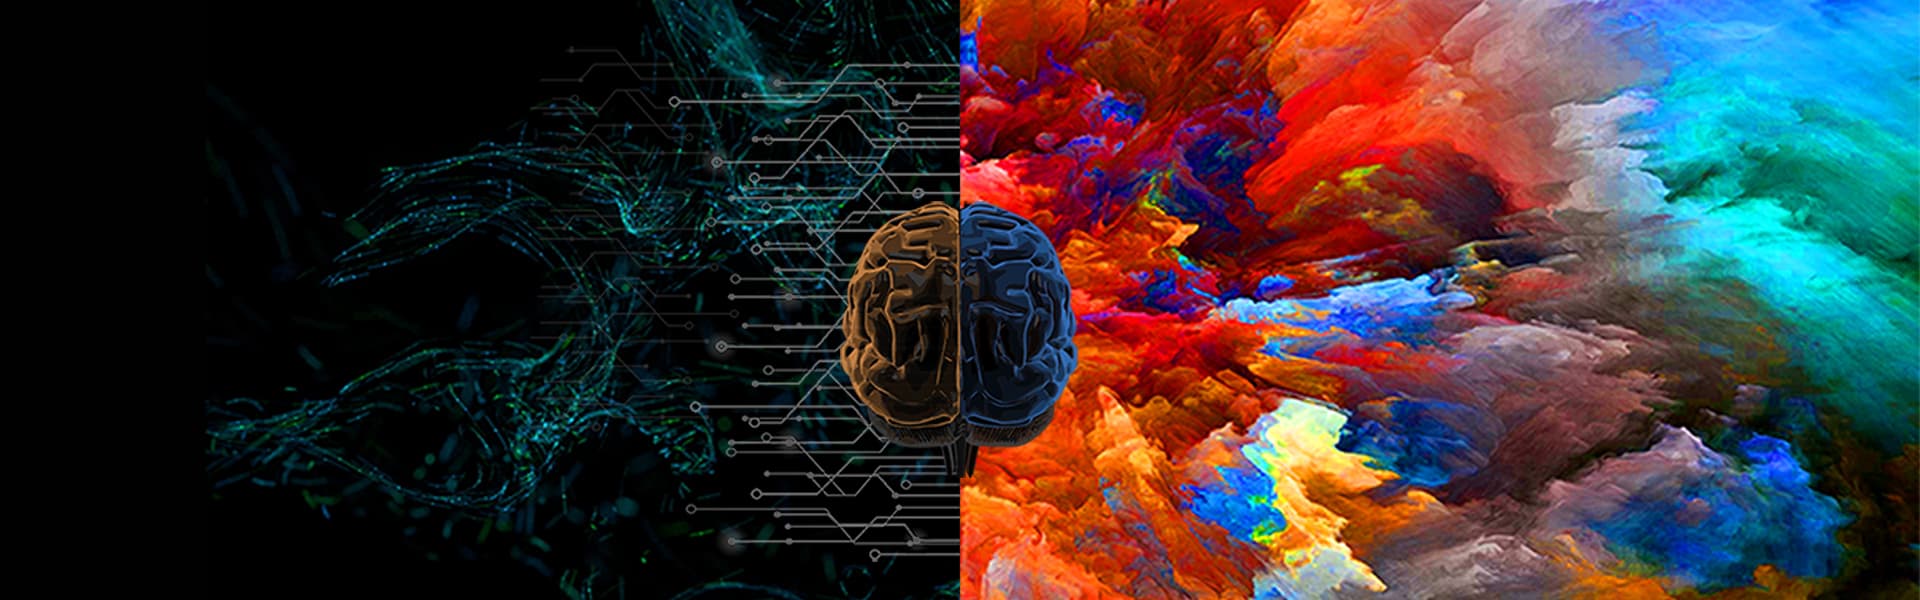 Left brain, right brain image